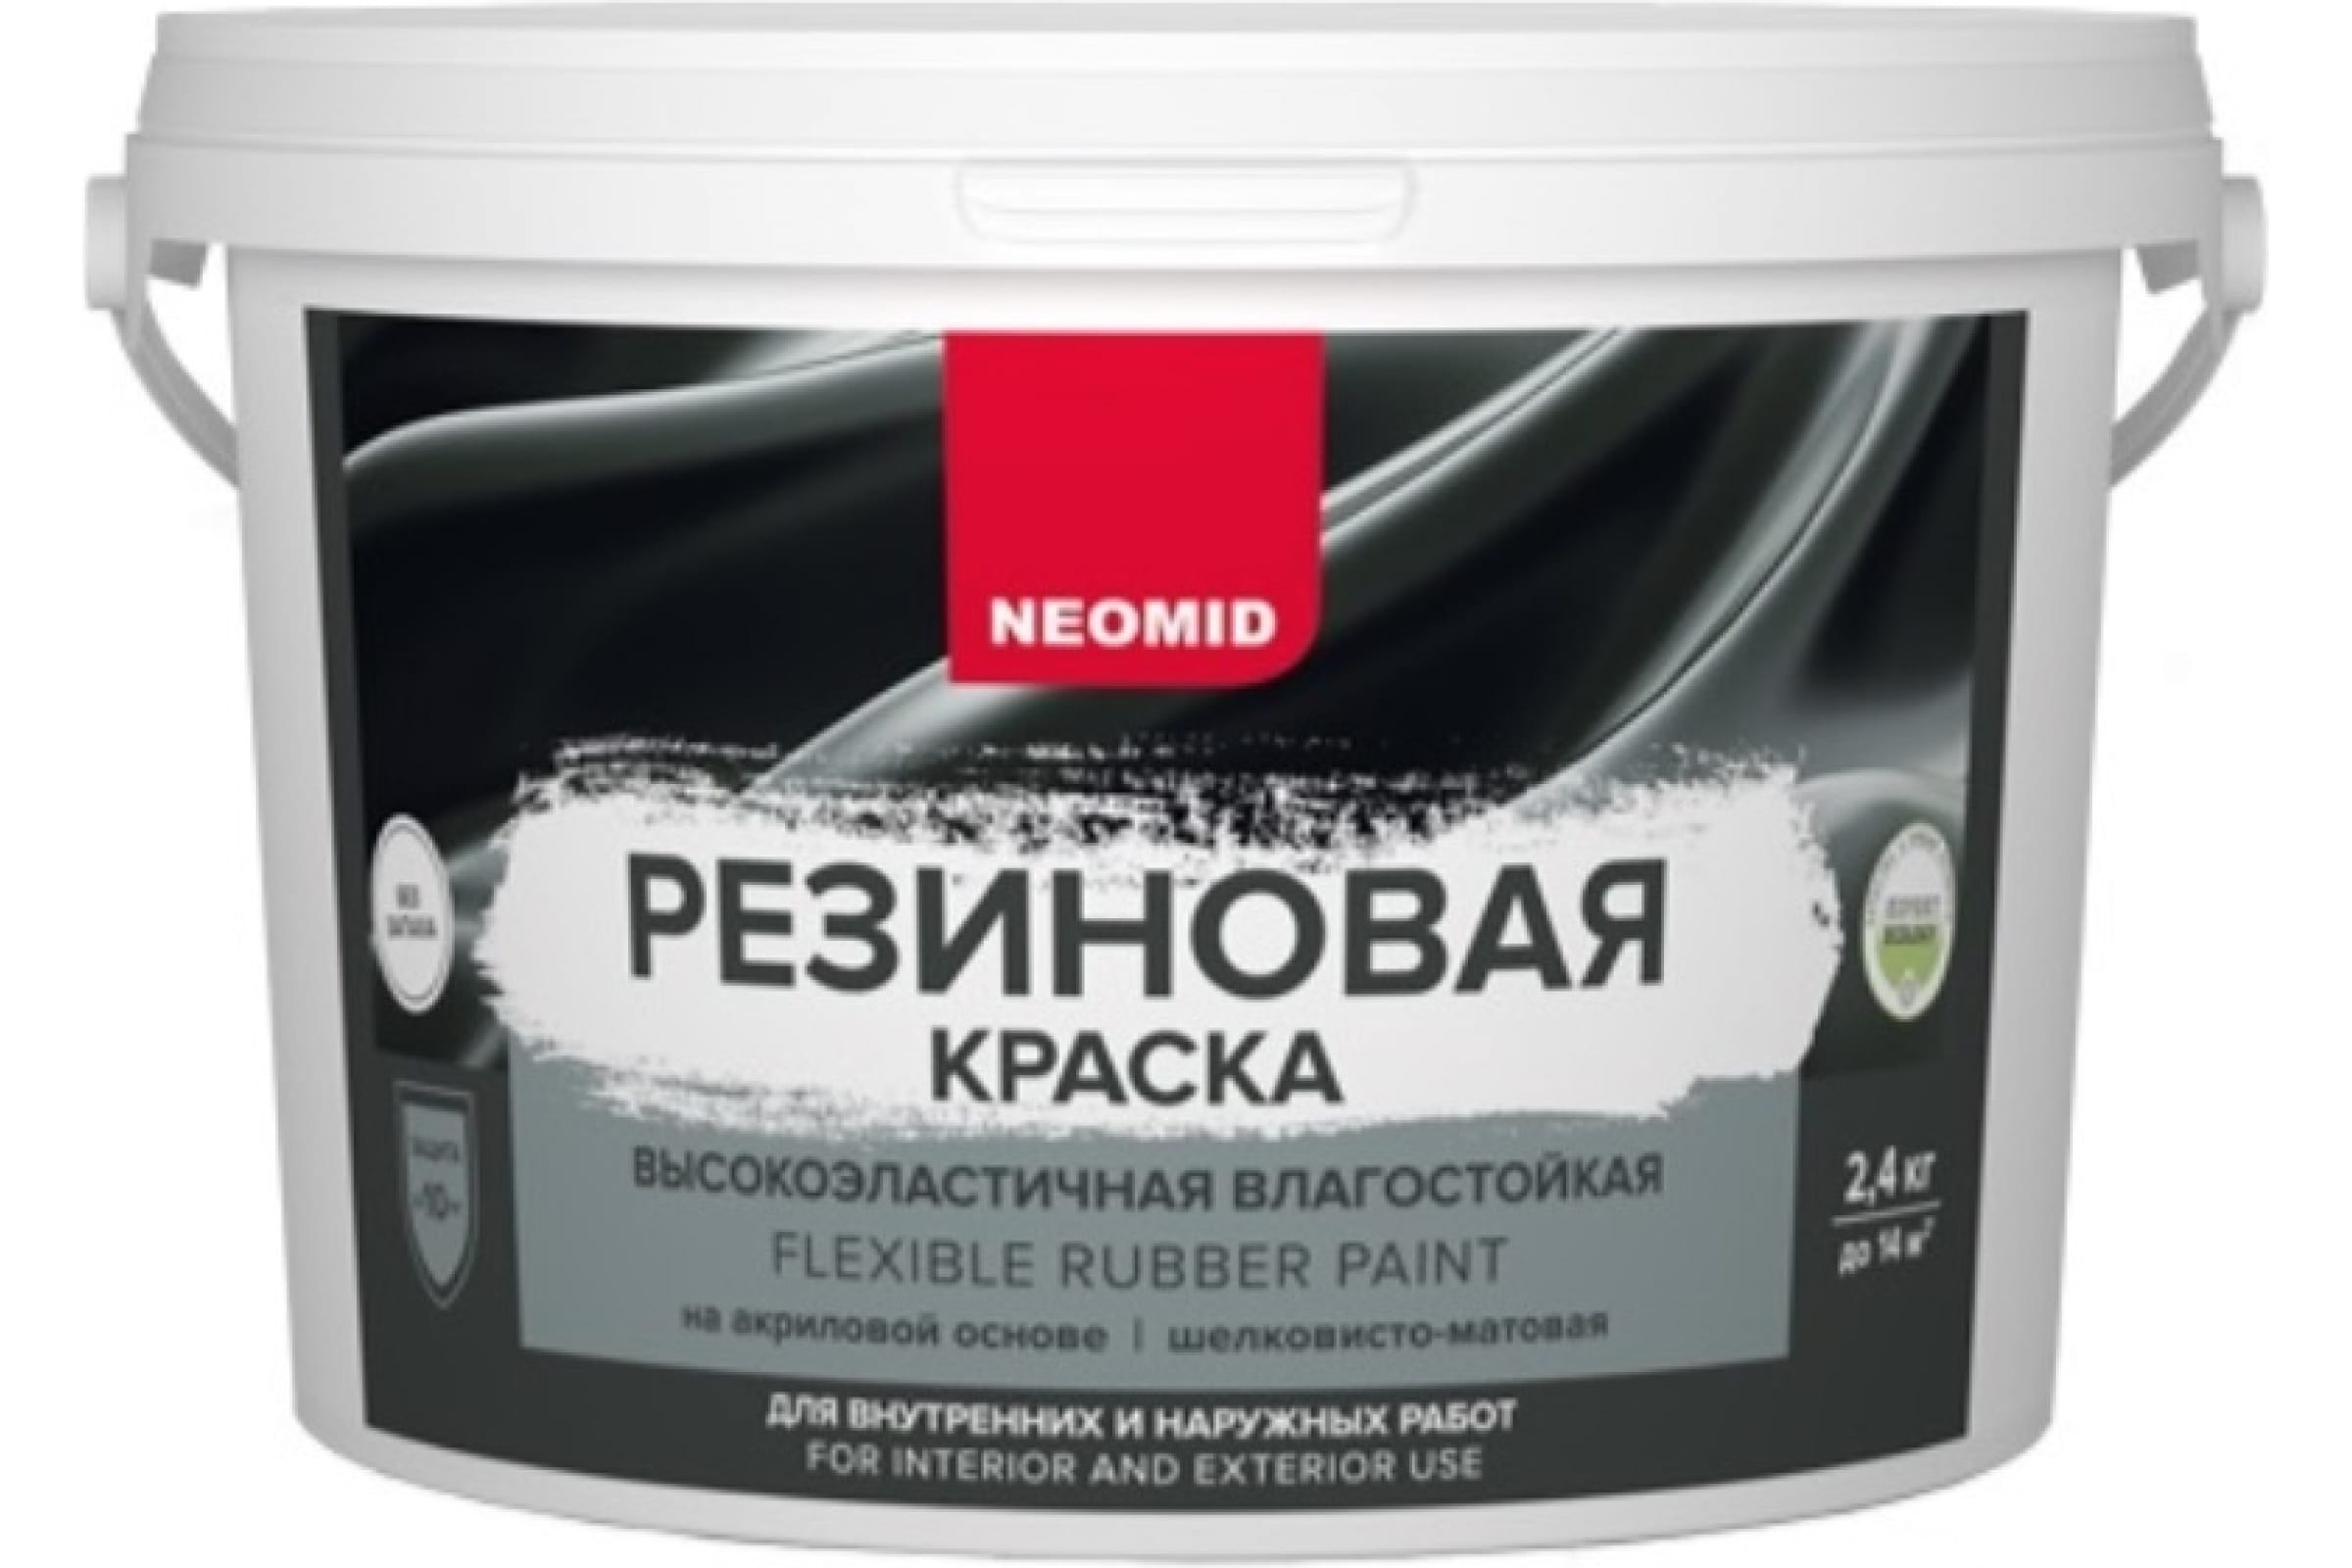 Neomid Краска резиновая Темный шоколад 2,4 кг Н-КраскаРез-2,4-ТемШок краска mastergood эластичная резиновая темный шоколад 2 4кг